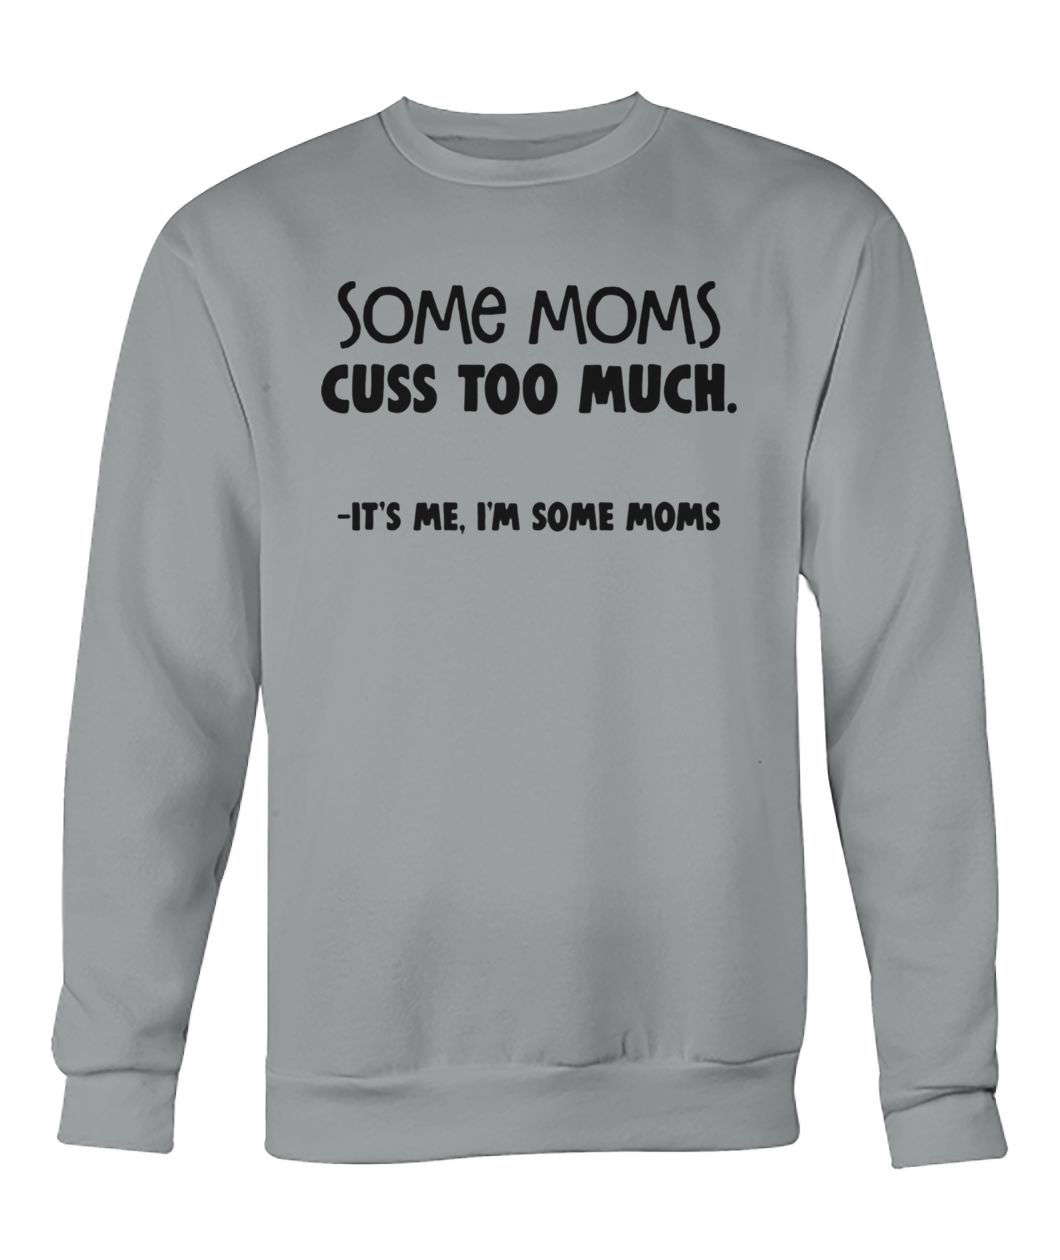 Some moms cuss too much it's me I'm some moms crew neck sweatshirt